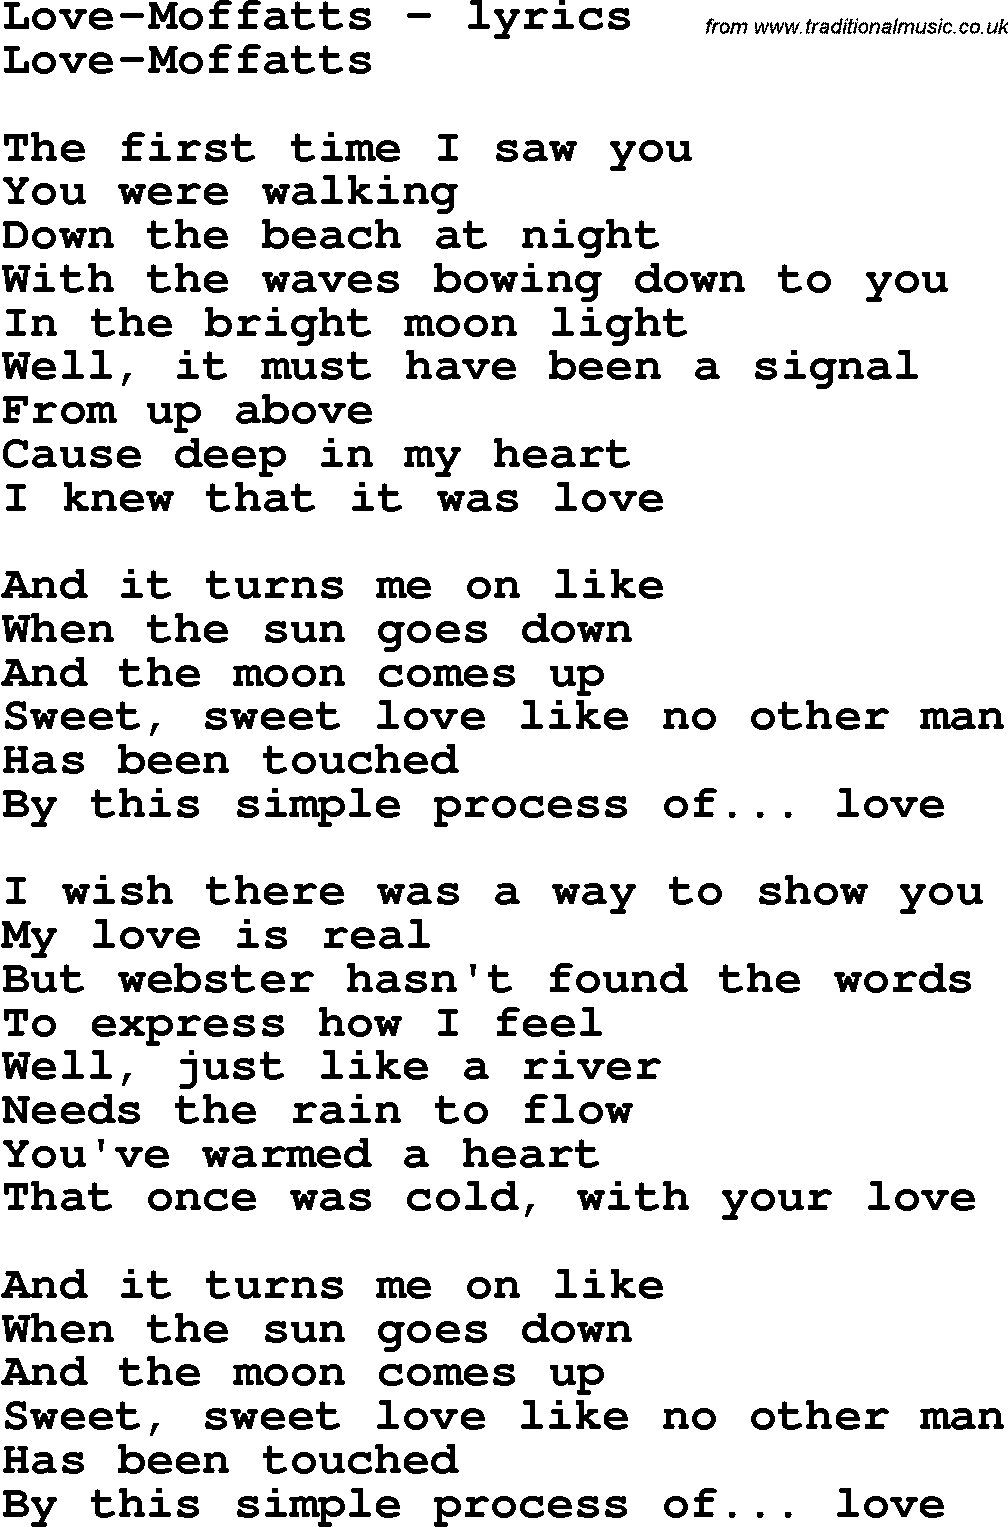 Love Song Lyrics for: Love-Moffatts